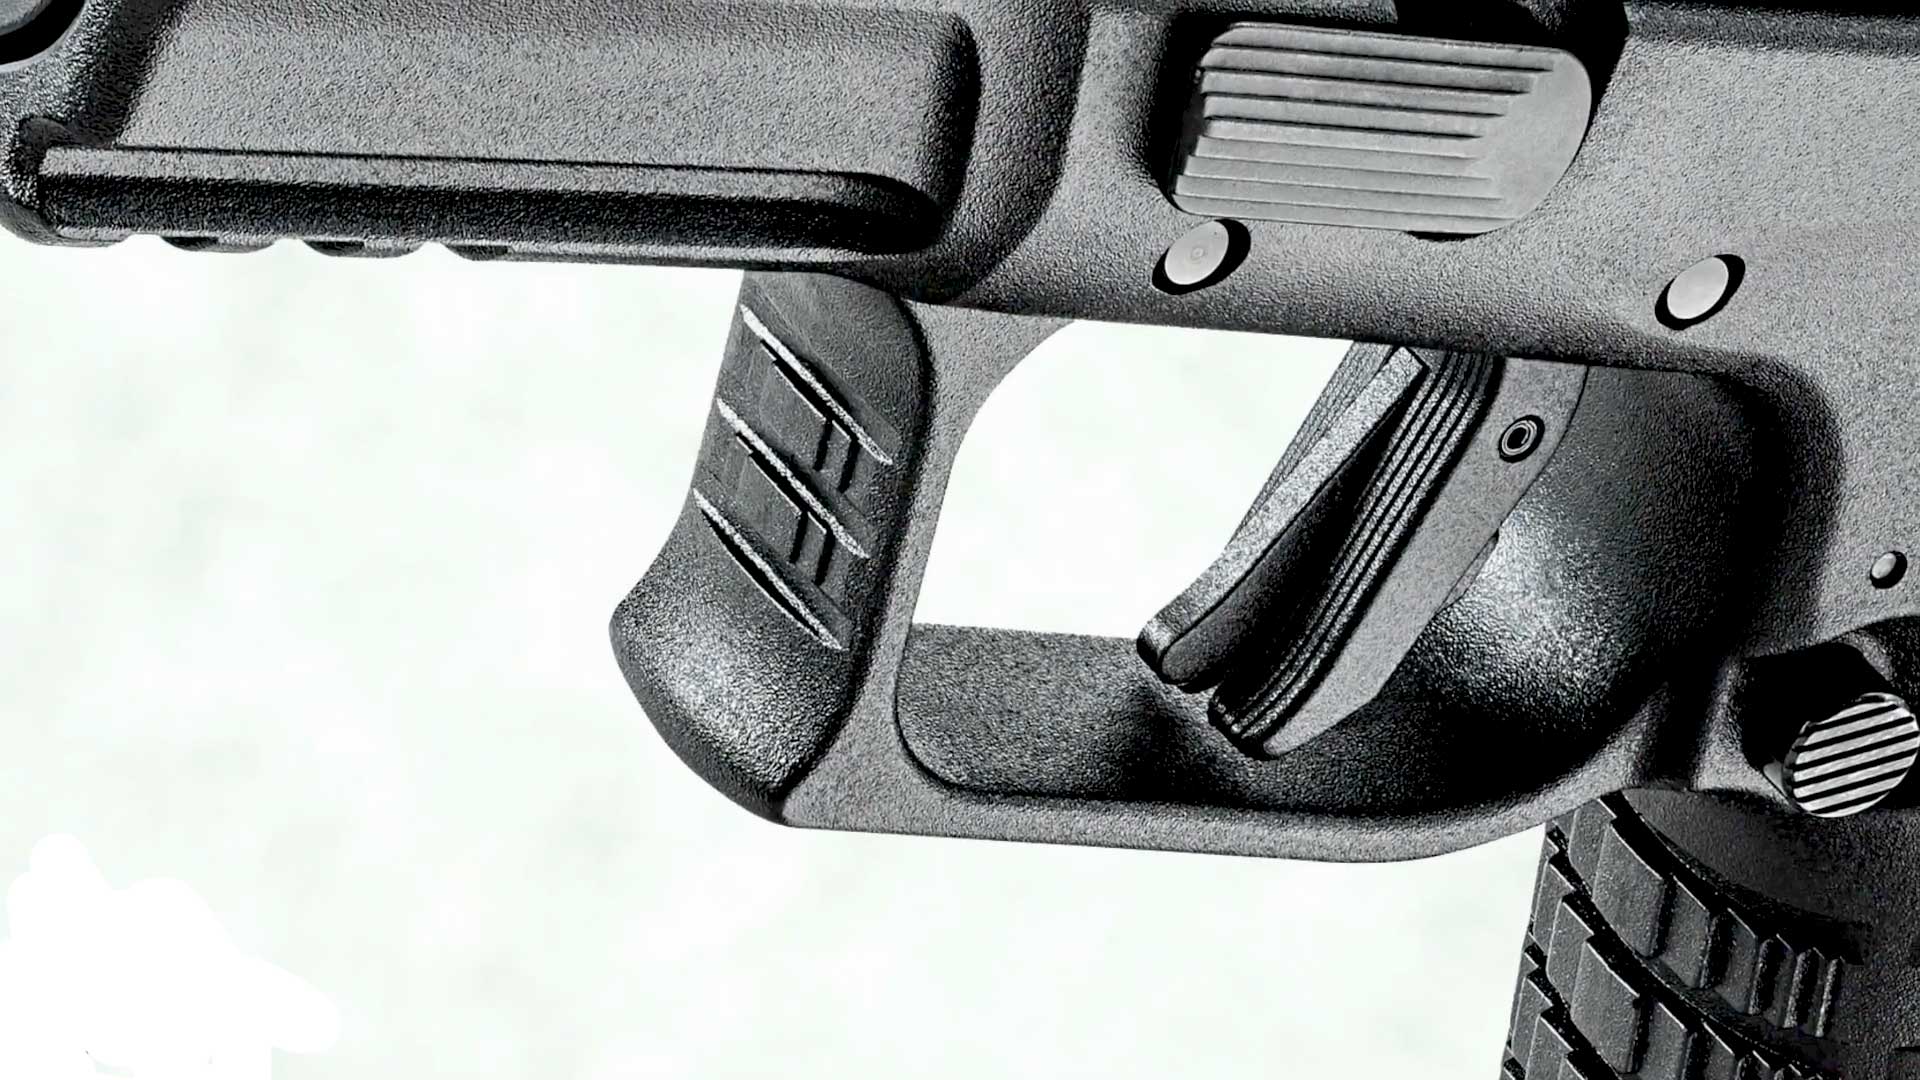 detail view up-close handgun black plastic trigger frame gun